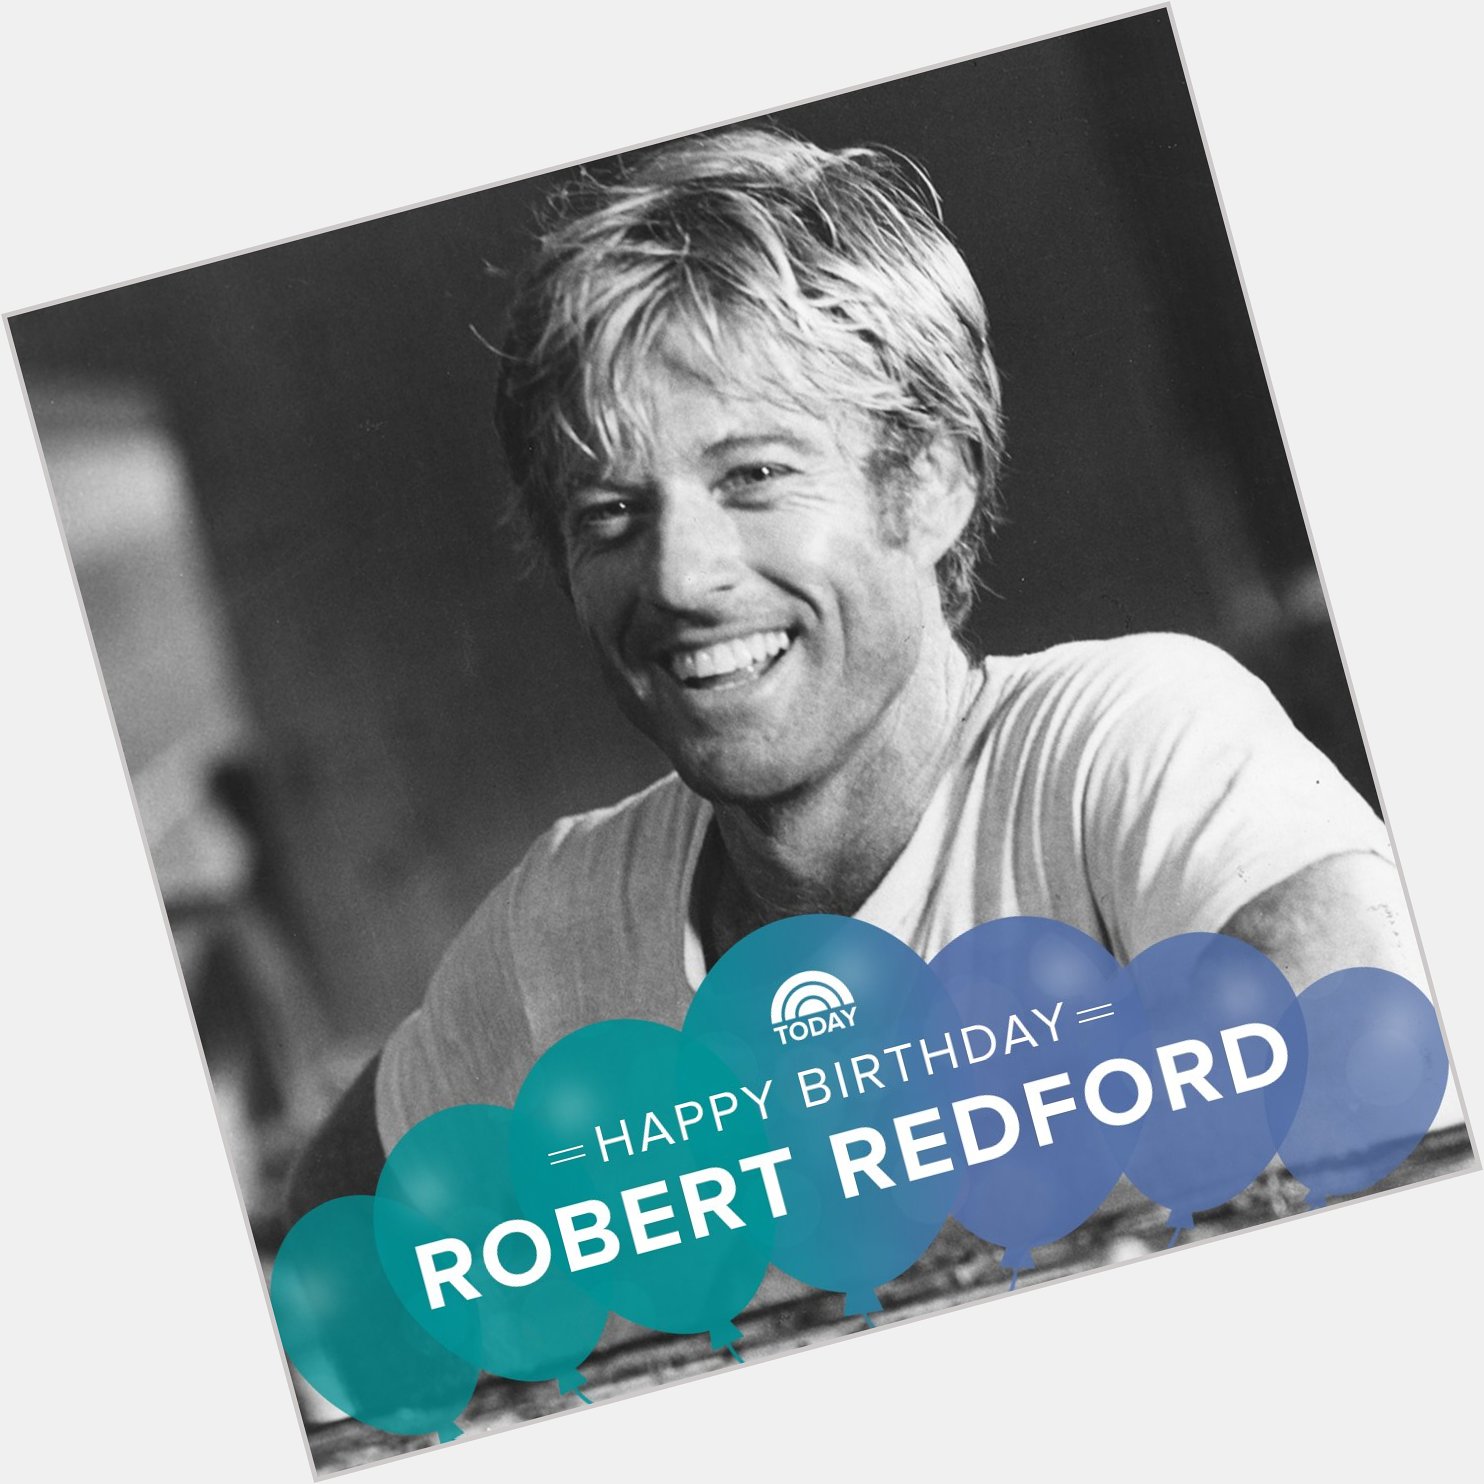 The Sundance Kid is 82 years old! Happy birthday, Robert Redford! 